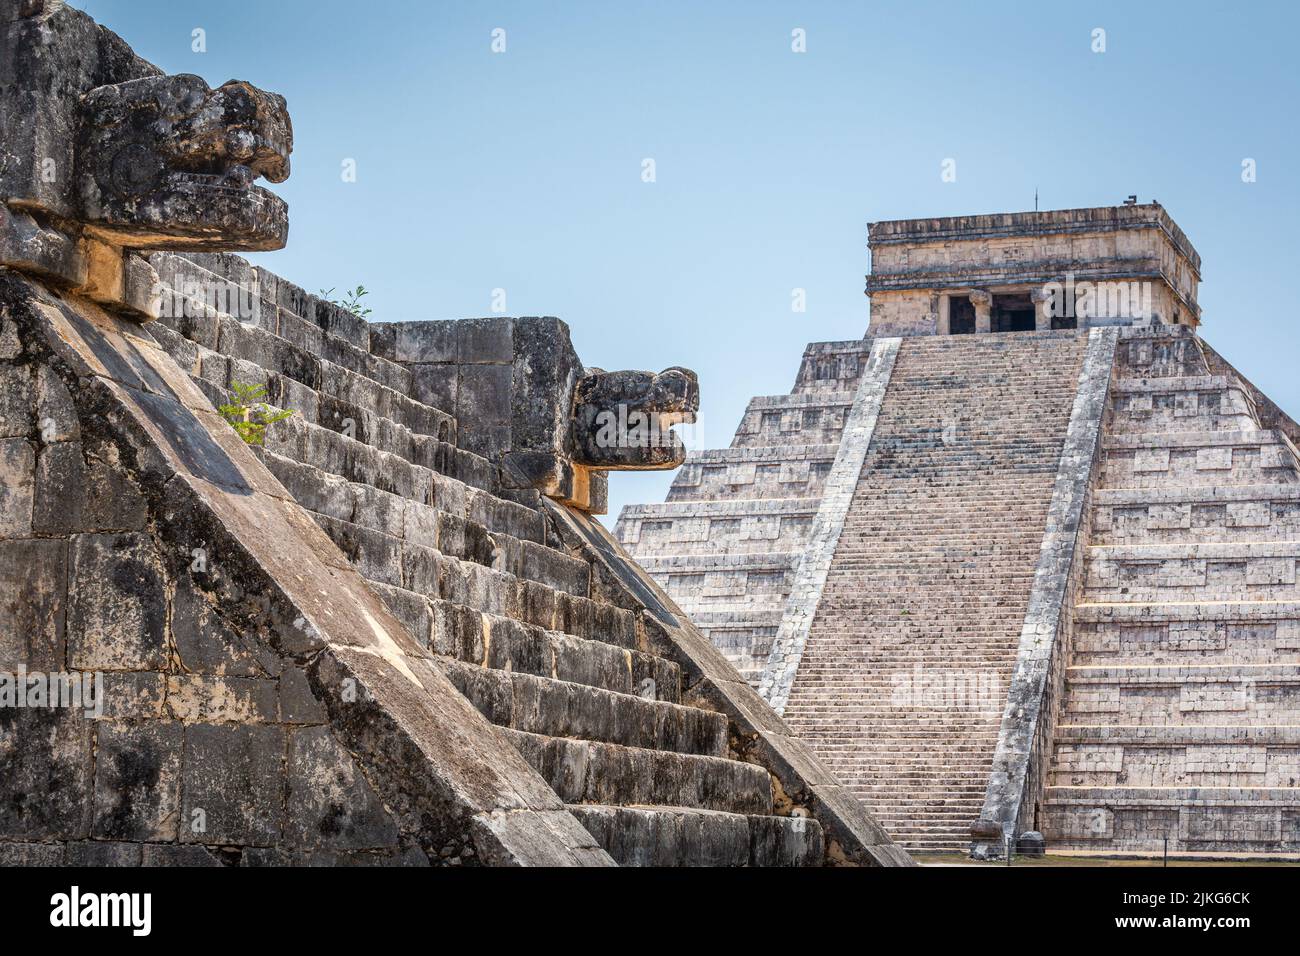 Vieille ruine de la pyramide de Chichen Itza kukulcan, civilisation maya ancienne Banque D'Images